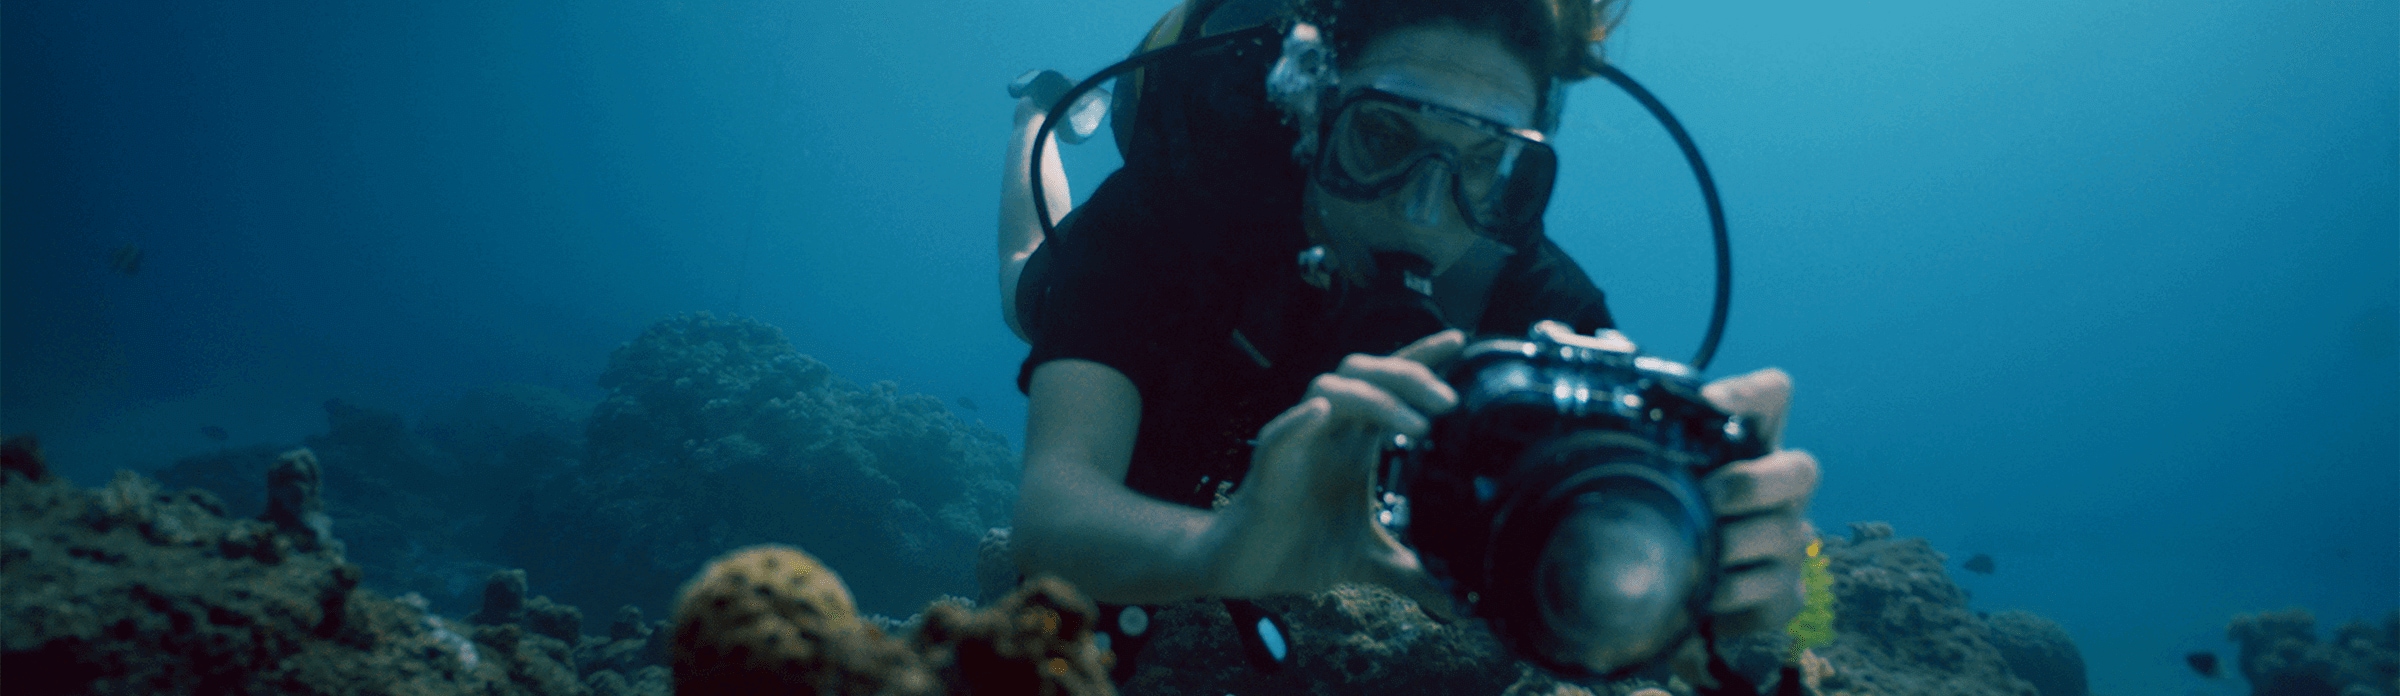 scuba diver taking a photo